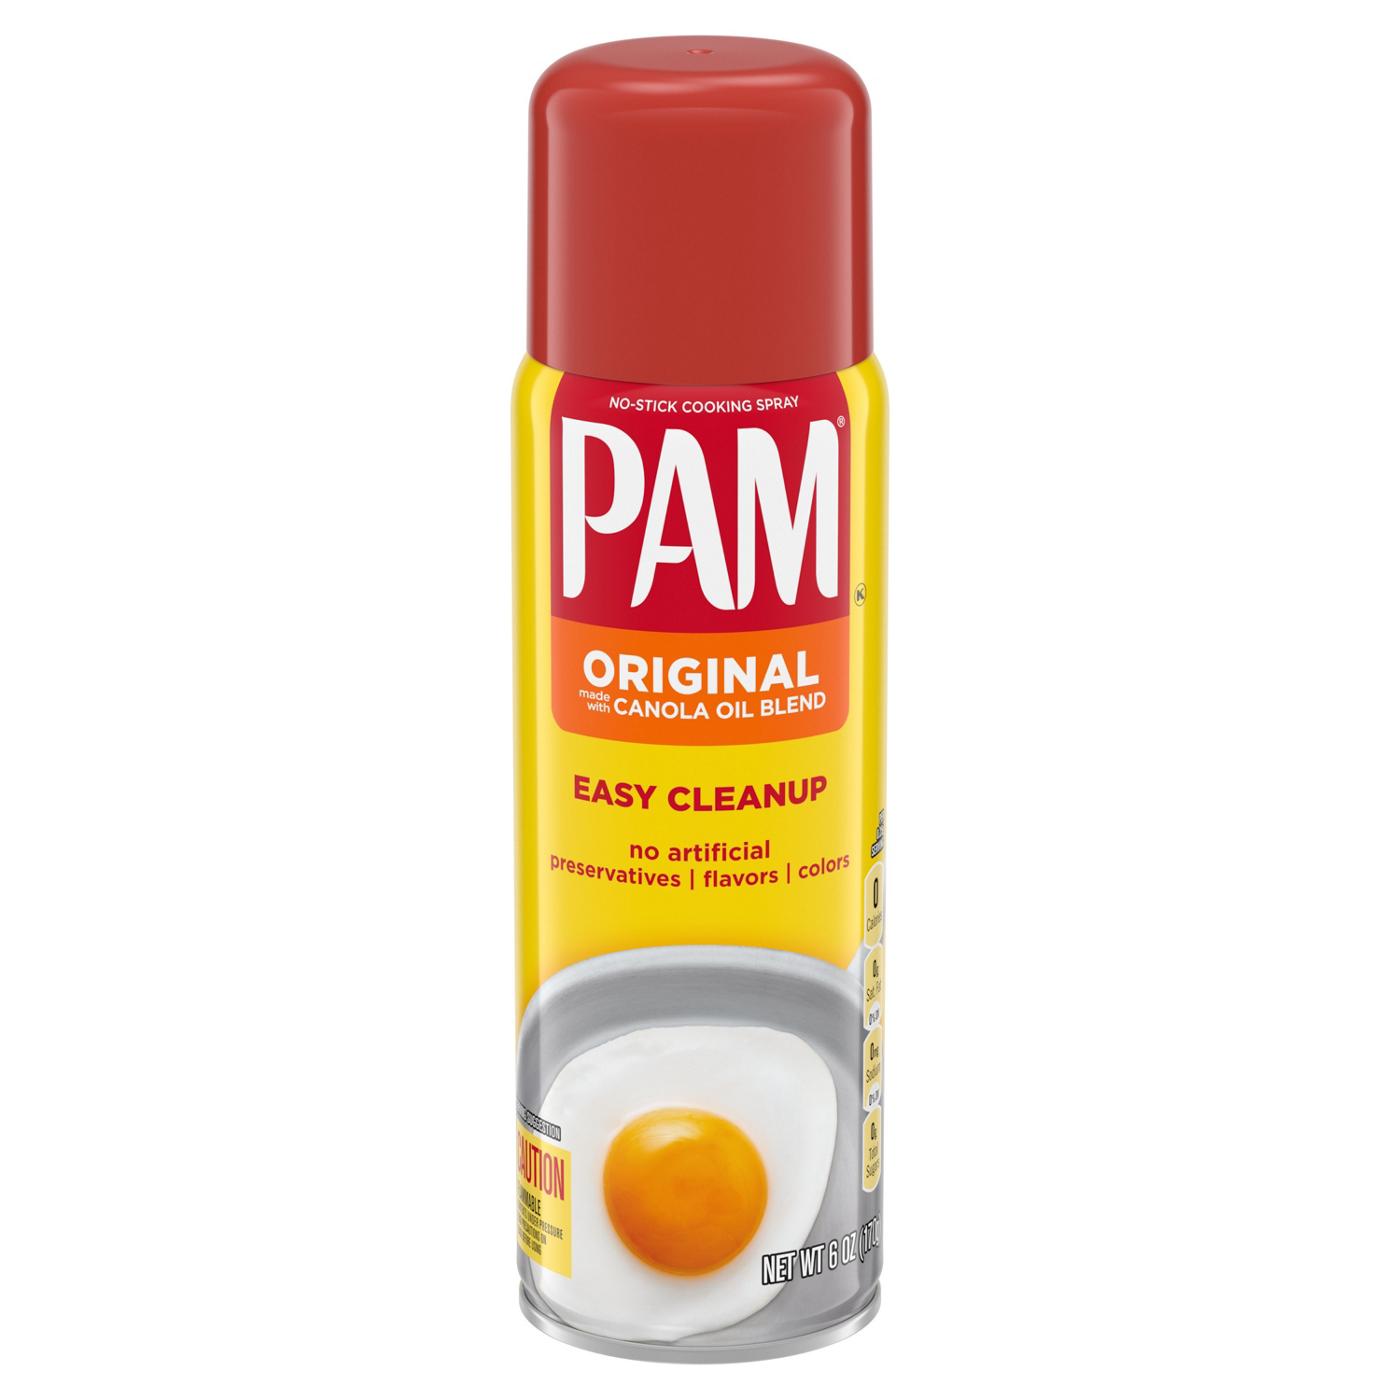 PAM Non Stick Original Cooking Spray; image 1 of 6